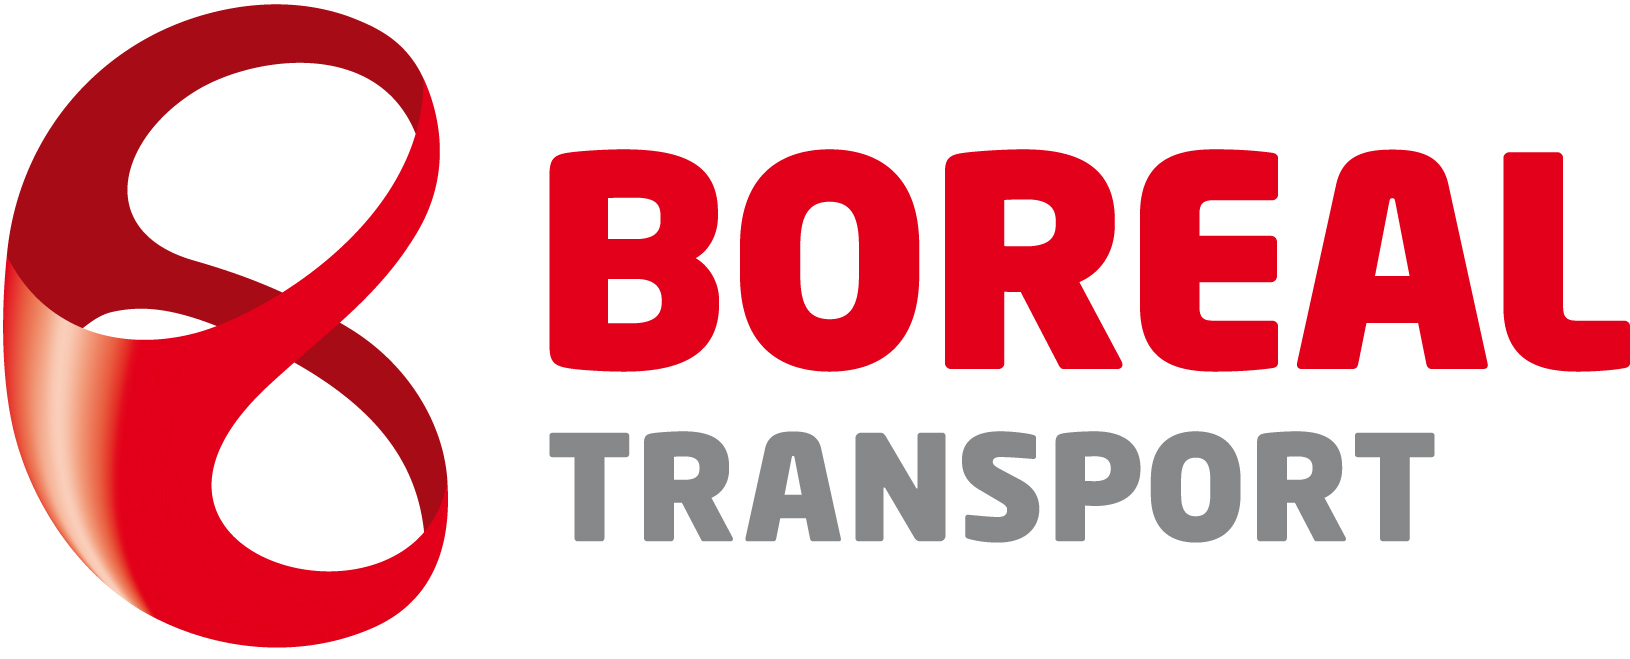 Boreal-logo_H.jpg